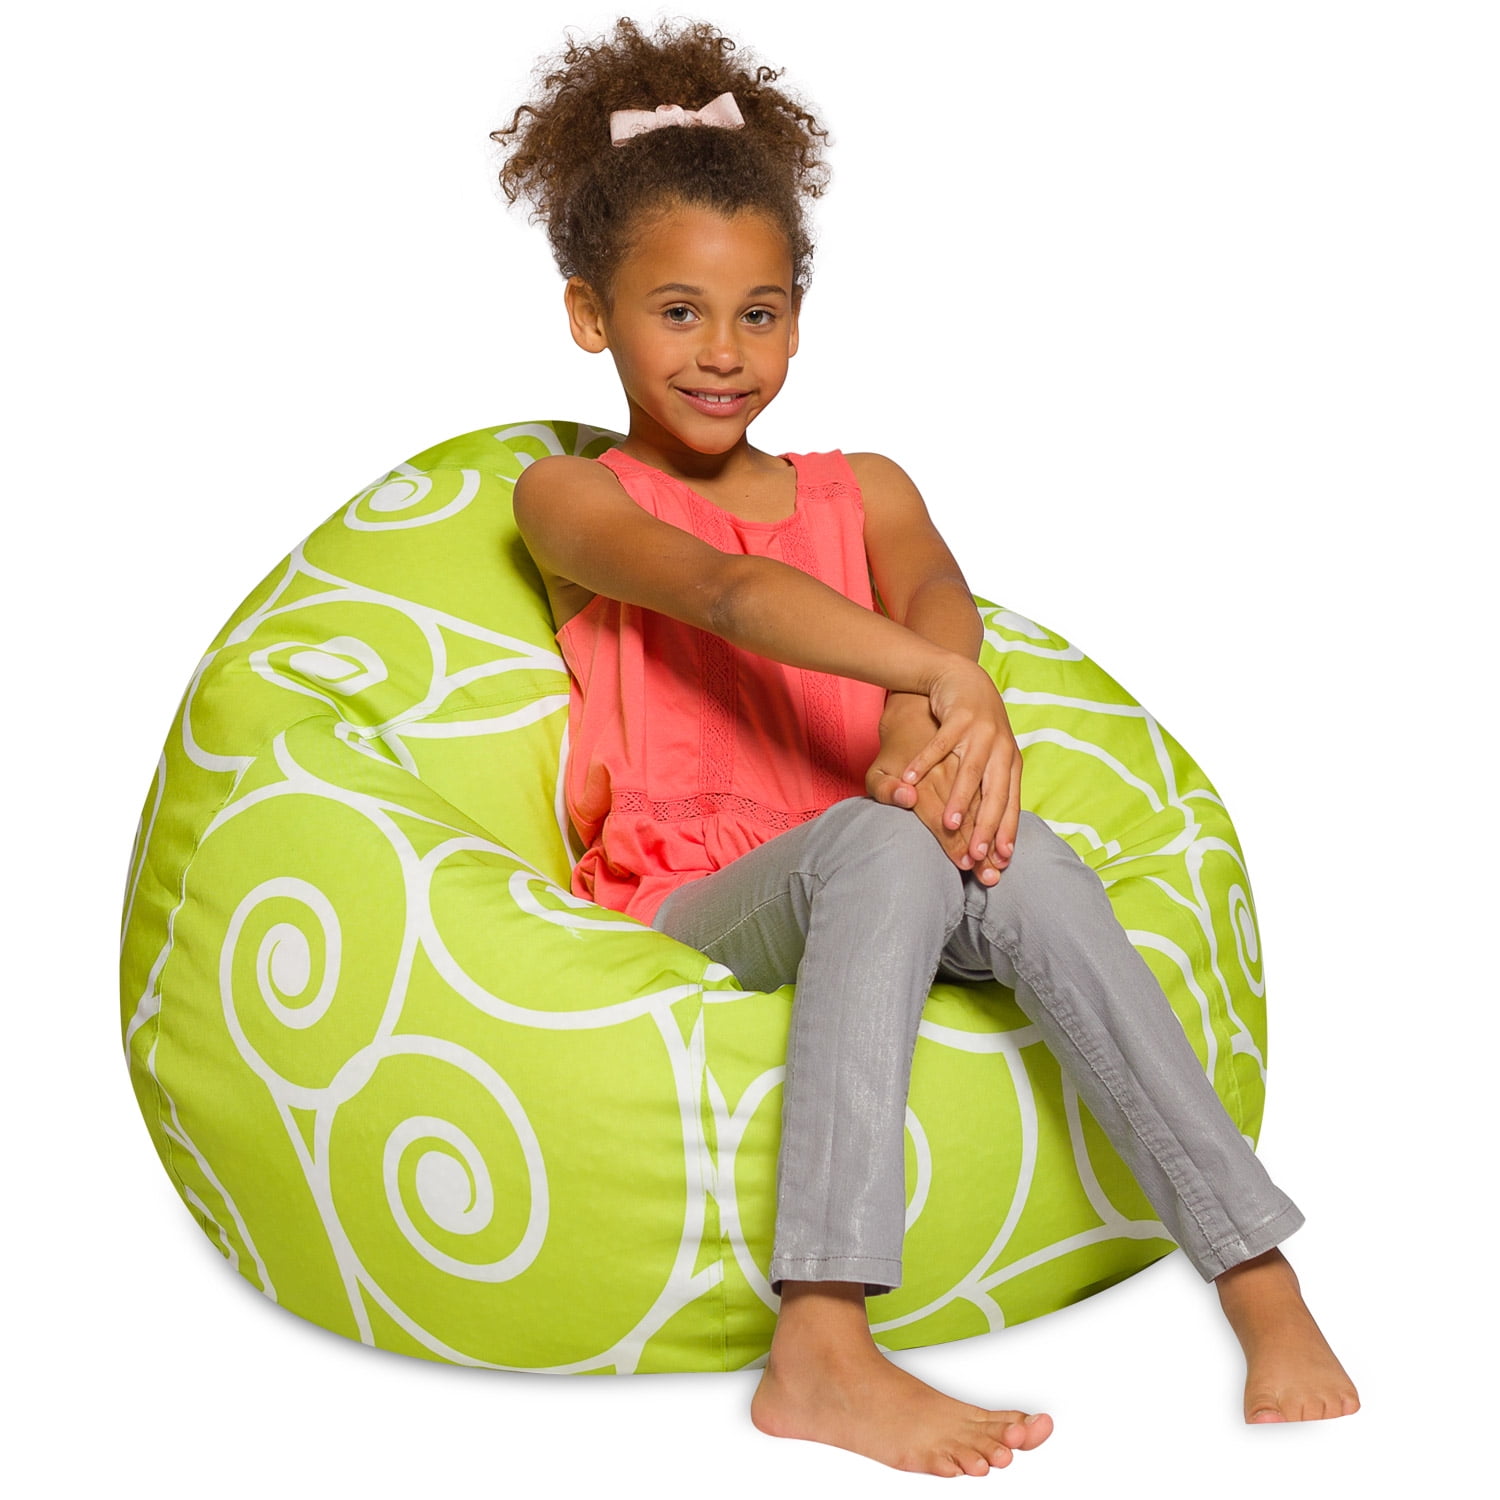  Kids' Bean Bag Chairs - L-Shaped / Kids' Bean Bag Chairs /  Kids' Chairs: Home & Kitchen